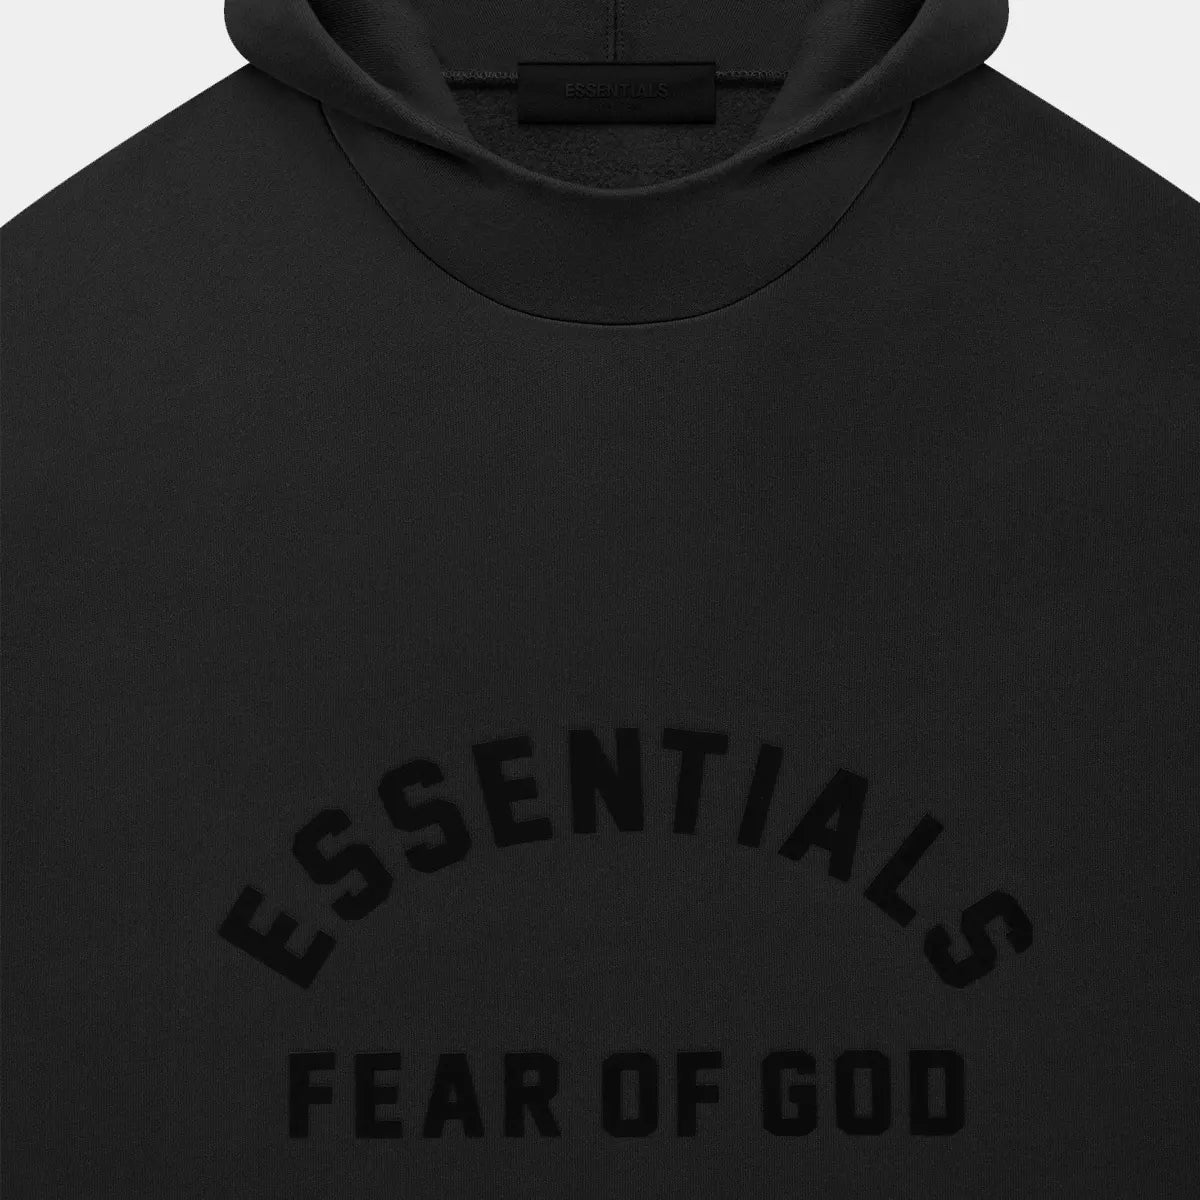 fear of god essentials hoodie black